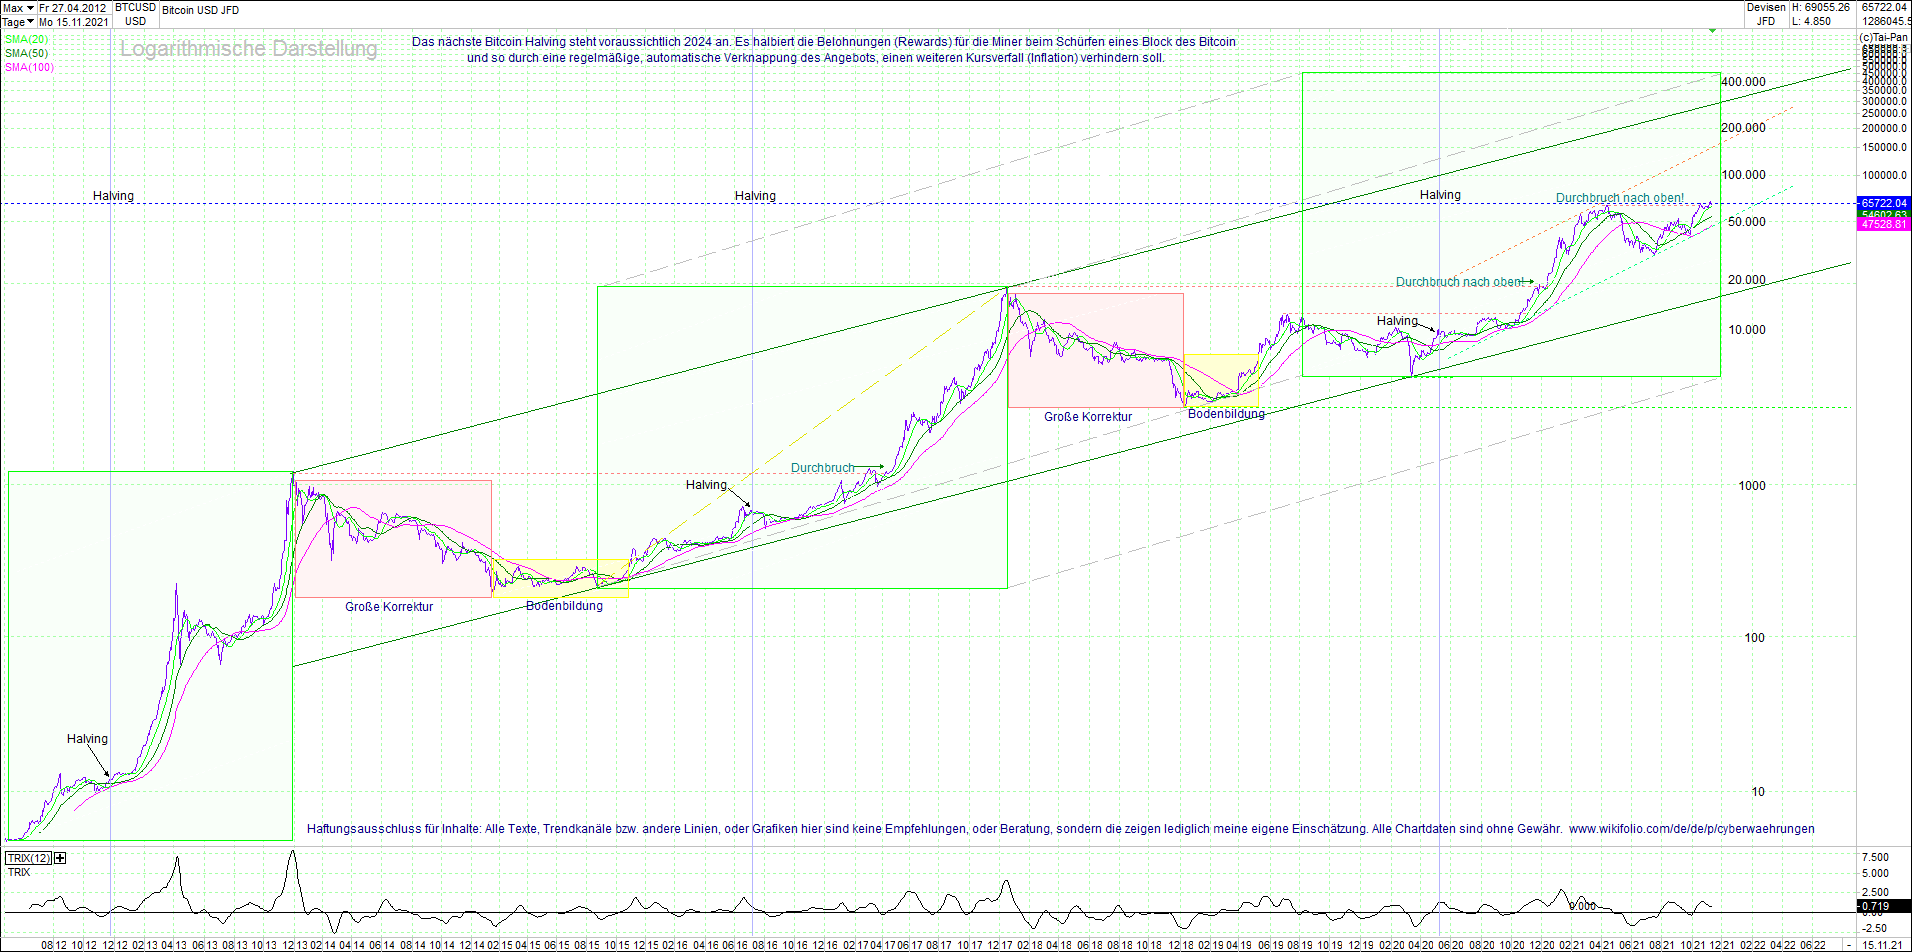 bitcoin_(btc)_chart_sehr_langfristig.png